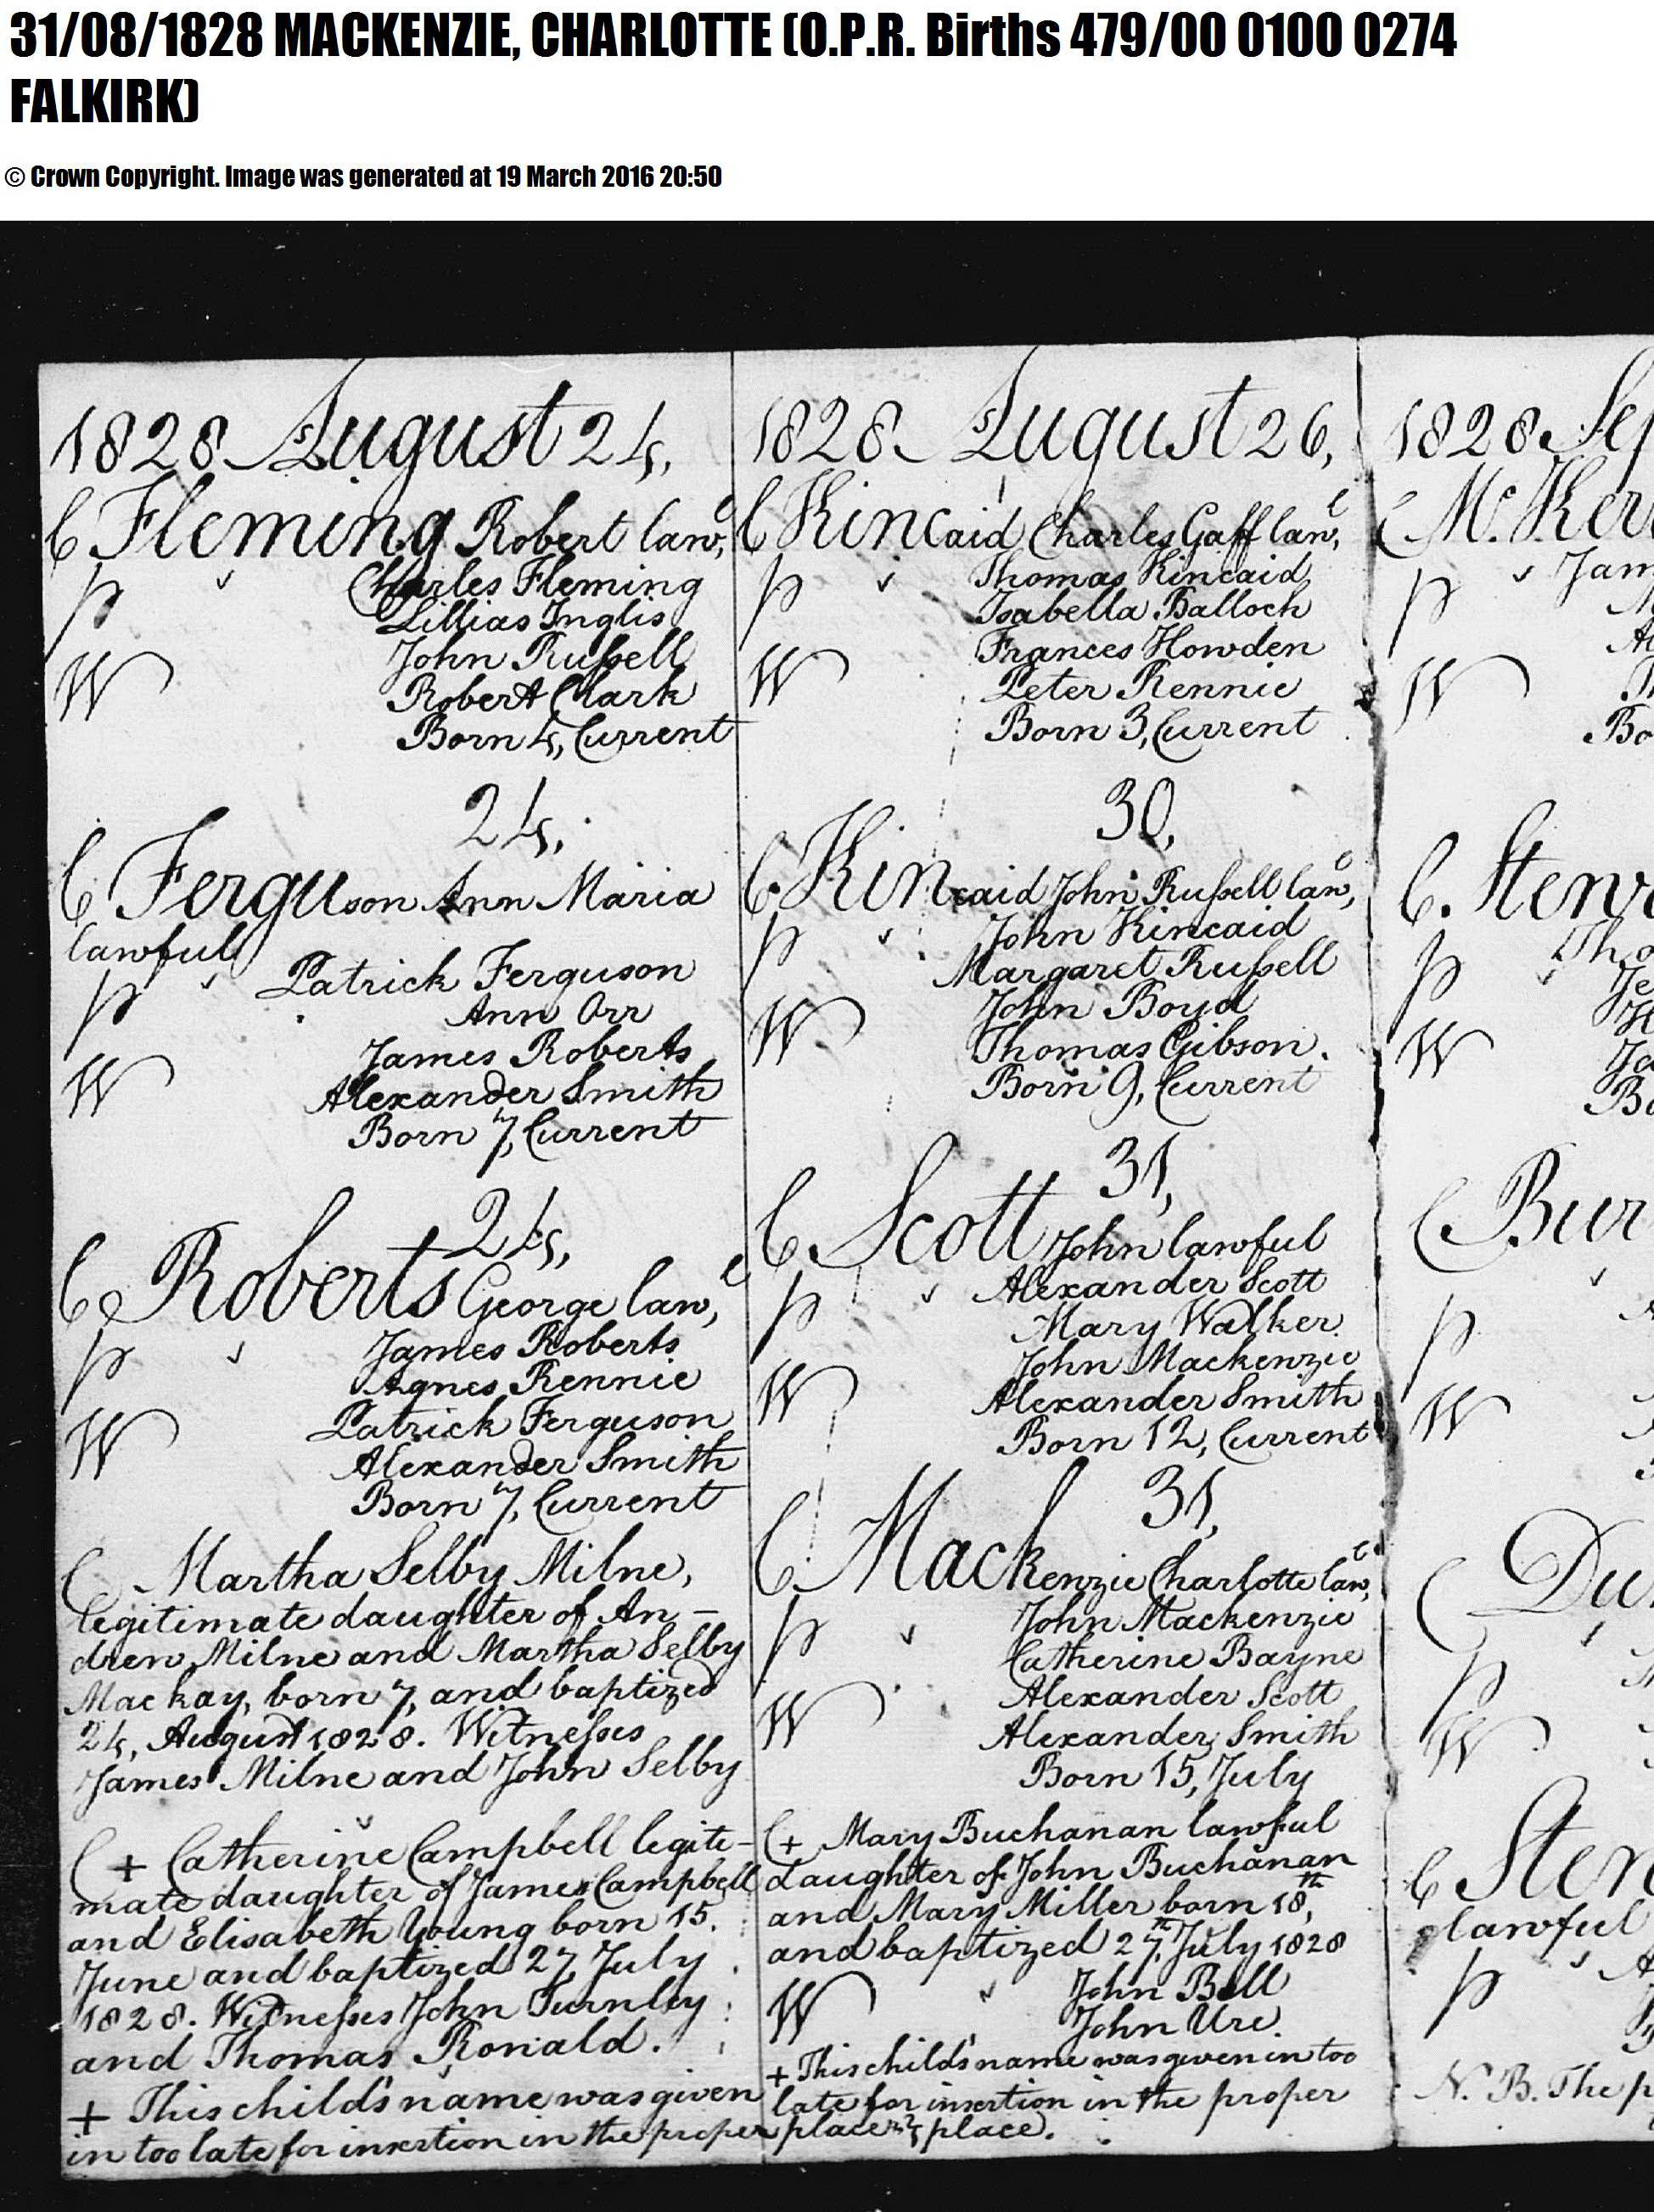 Baptism Register Entry 1828 Charlotte MacKENZIE, August 31, 1828, Linked To: <a href='i480.html' >Charlotte McKenzie ¯</a>